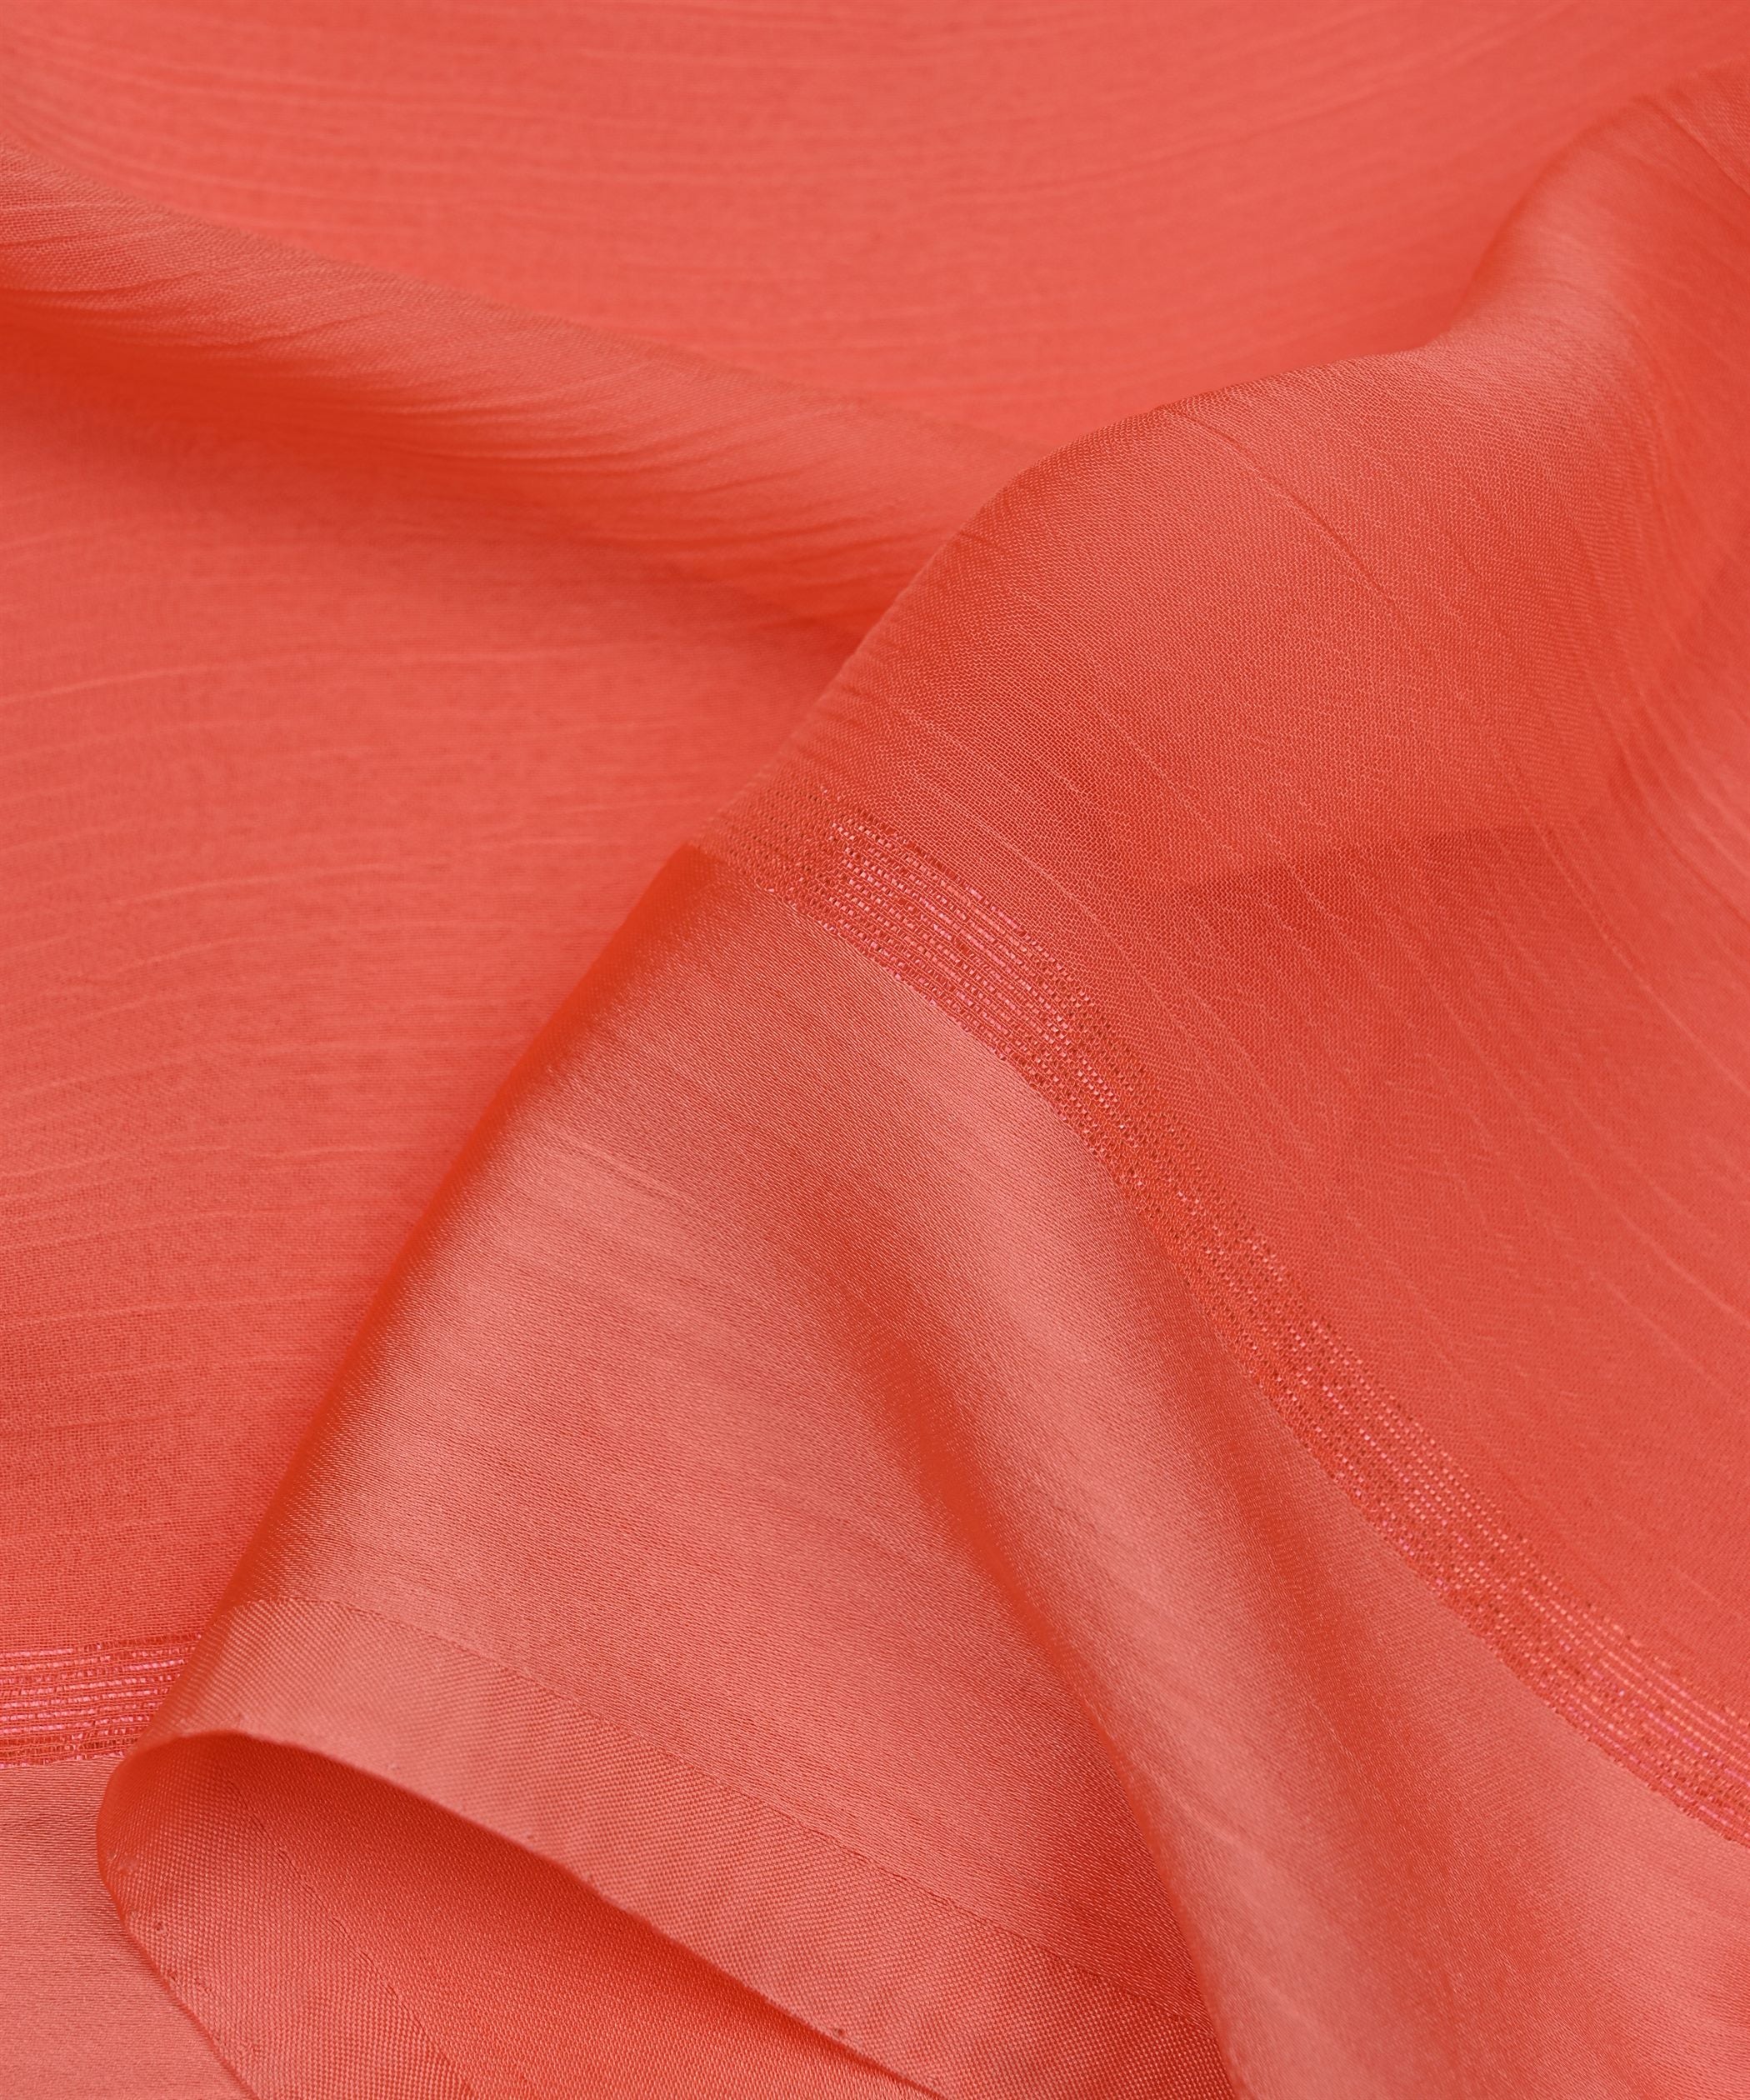 Peach Plain Dyed Chiffon Fabric with Satin Border